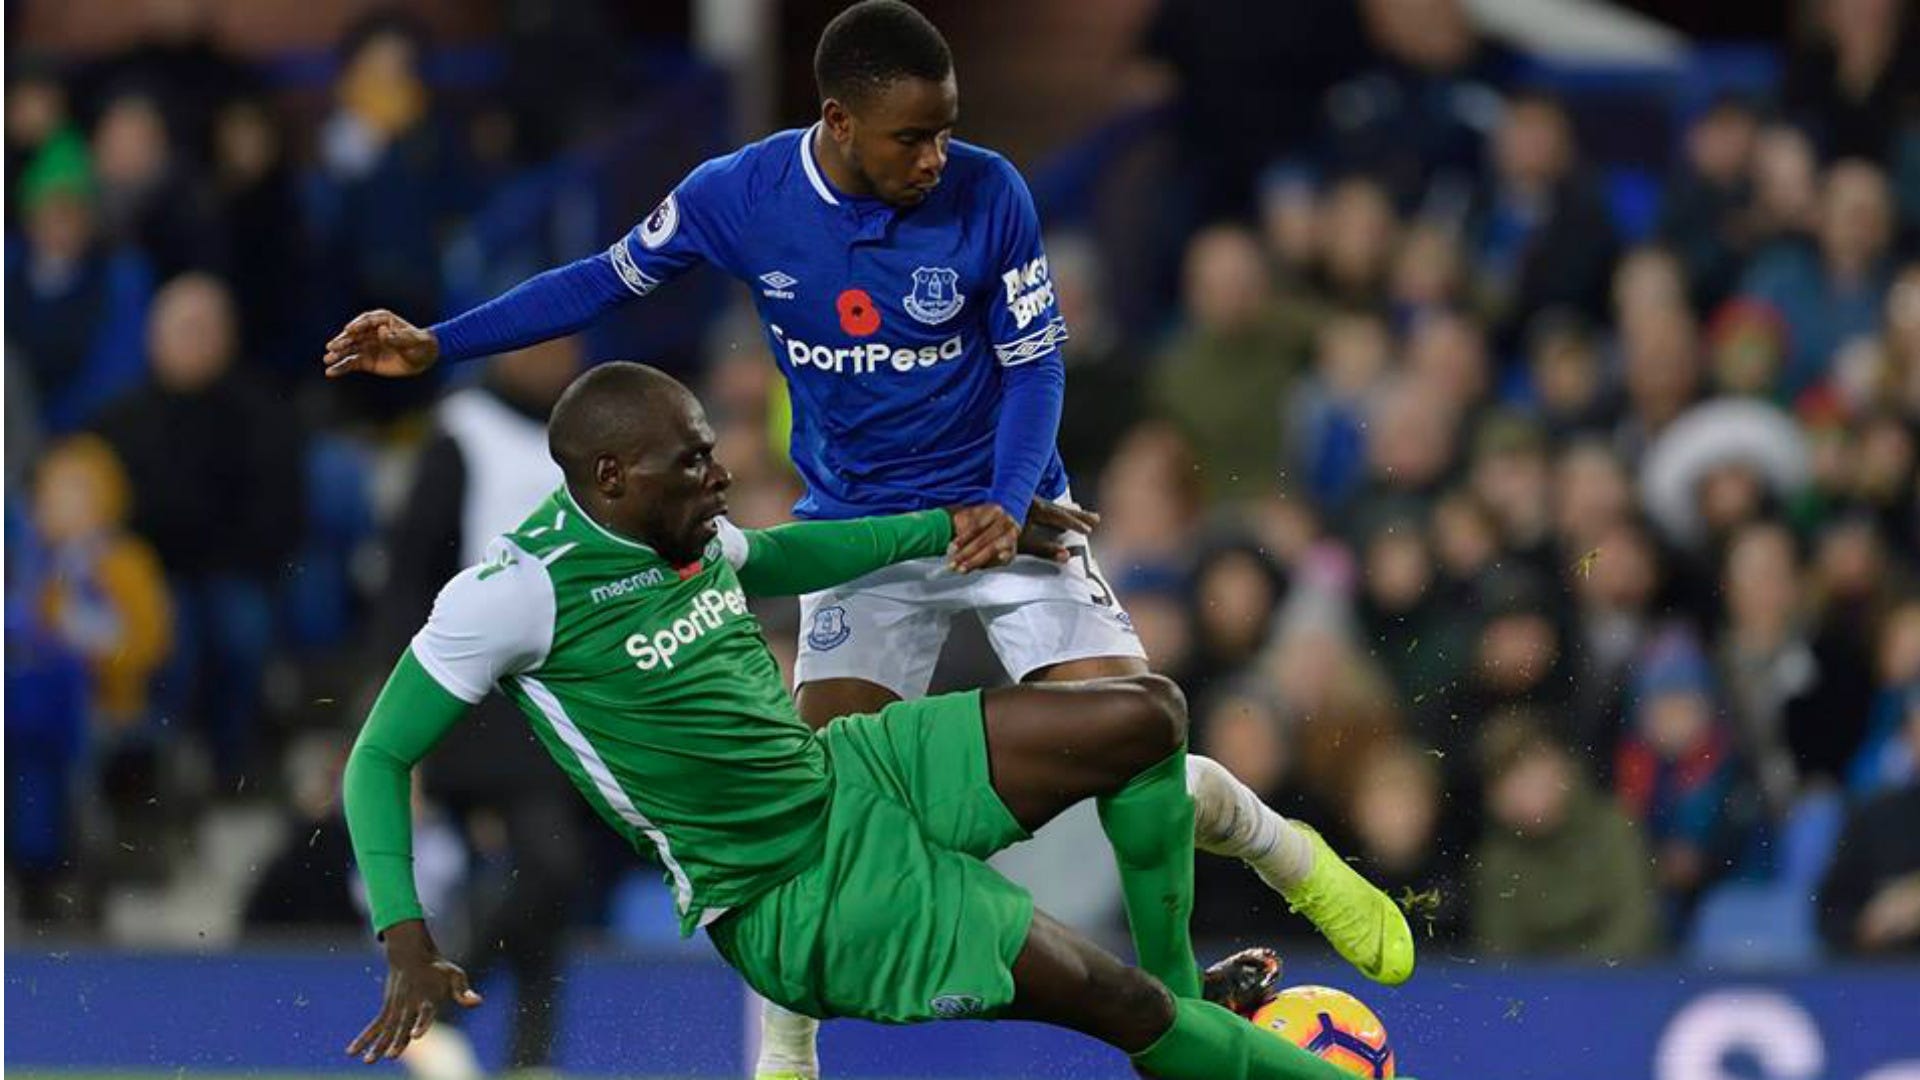 Gor Mahia defender Joash Onyango v Everton.